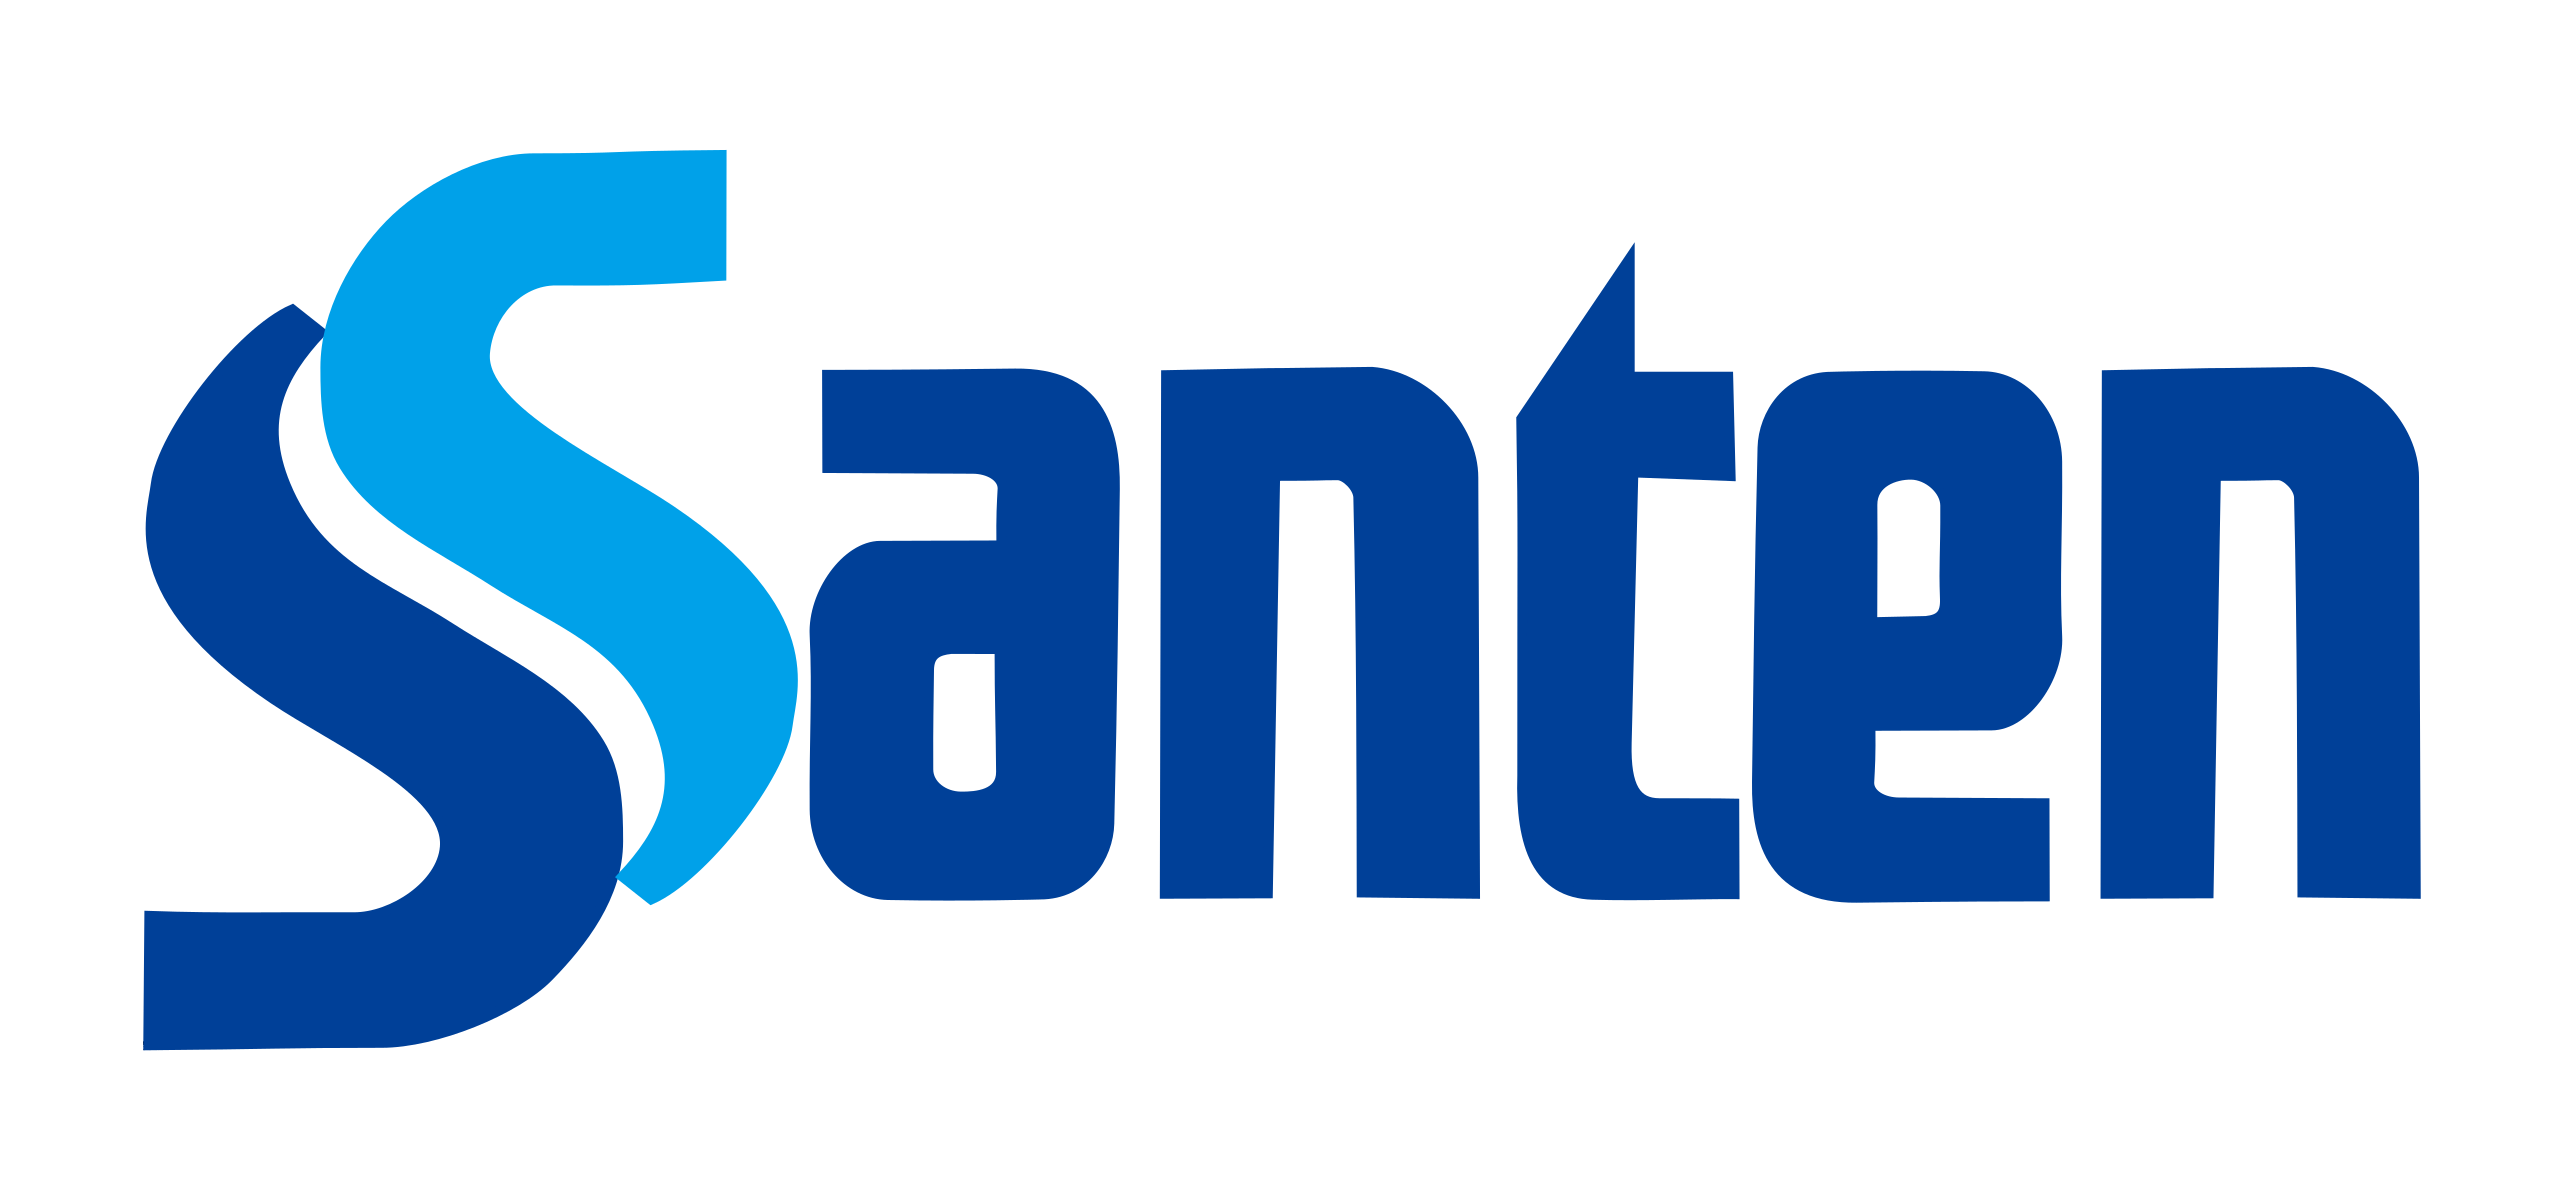 Santen Pharmaceutical company logo.svg